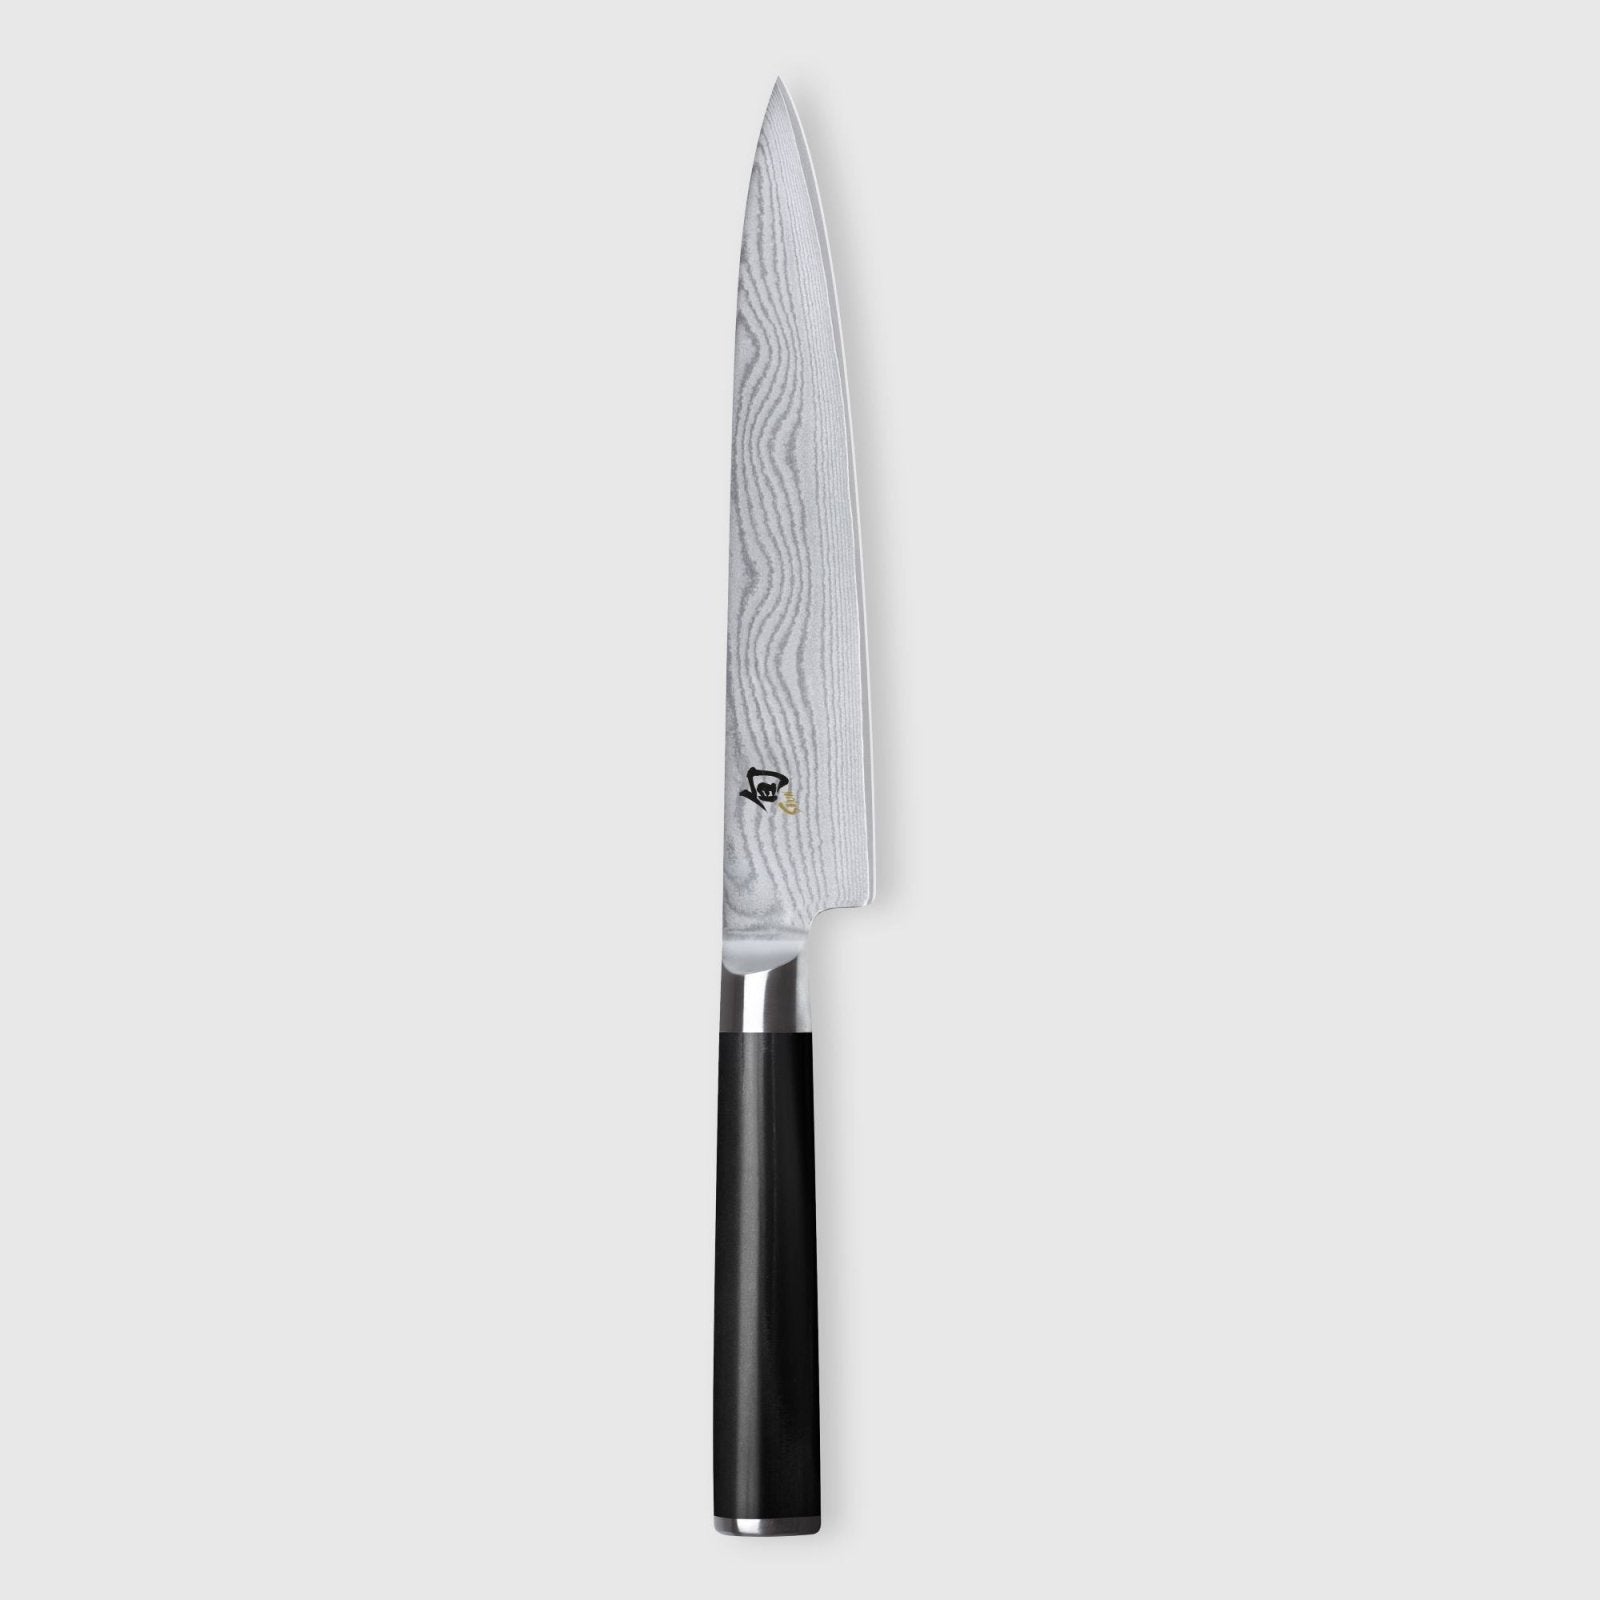 KAI Shun 15cm Utility Knife - KAI-DM-0701 - The Cotswold Knife Company